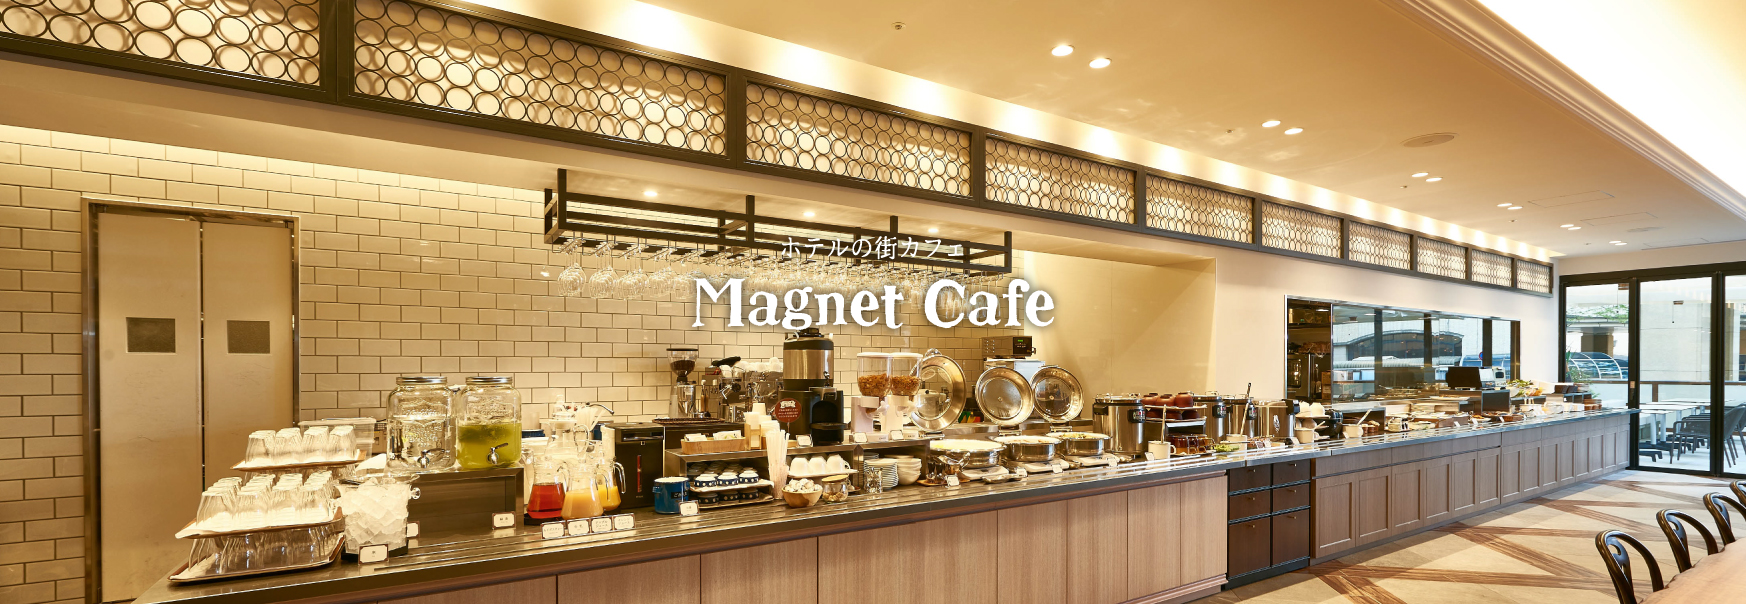 MagnetCafe